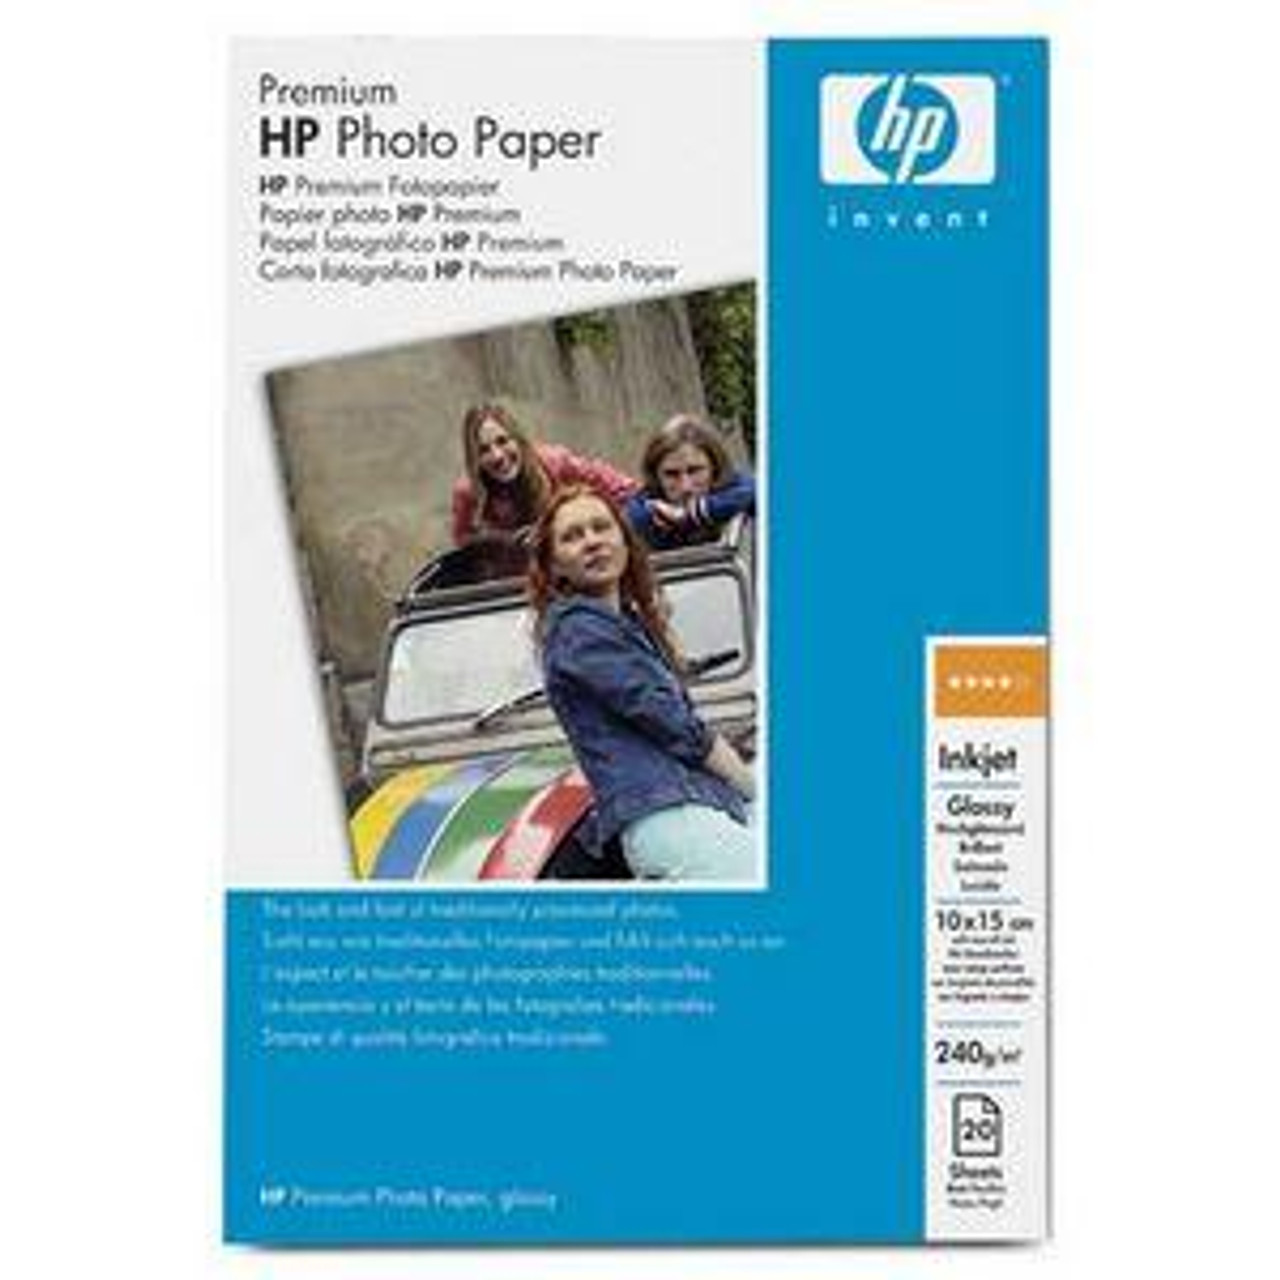 Portiek Sloppenwijk Bezet Q1991A HP Premium Photo Paper Glossy 10x15 20sheets 240gsm (Refurbishe